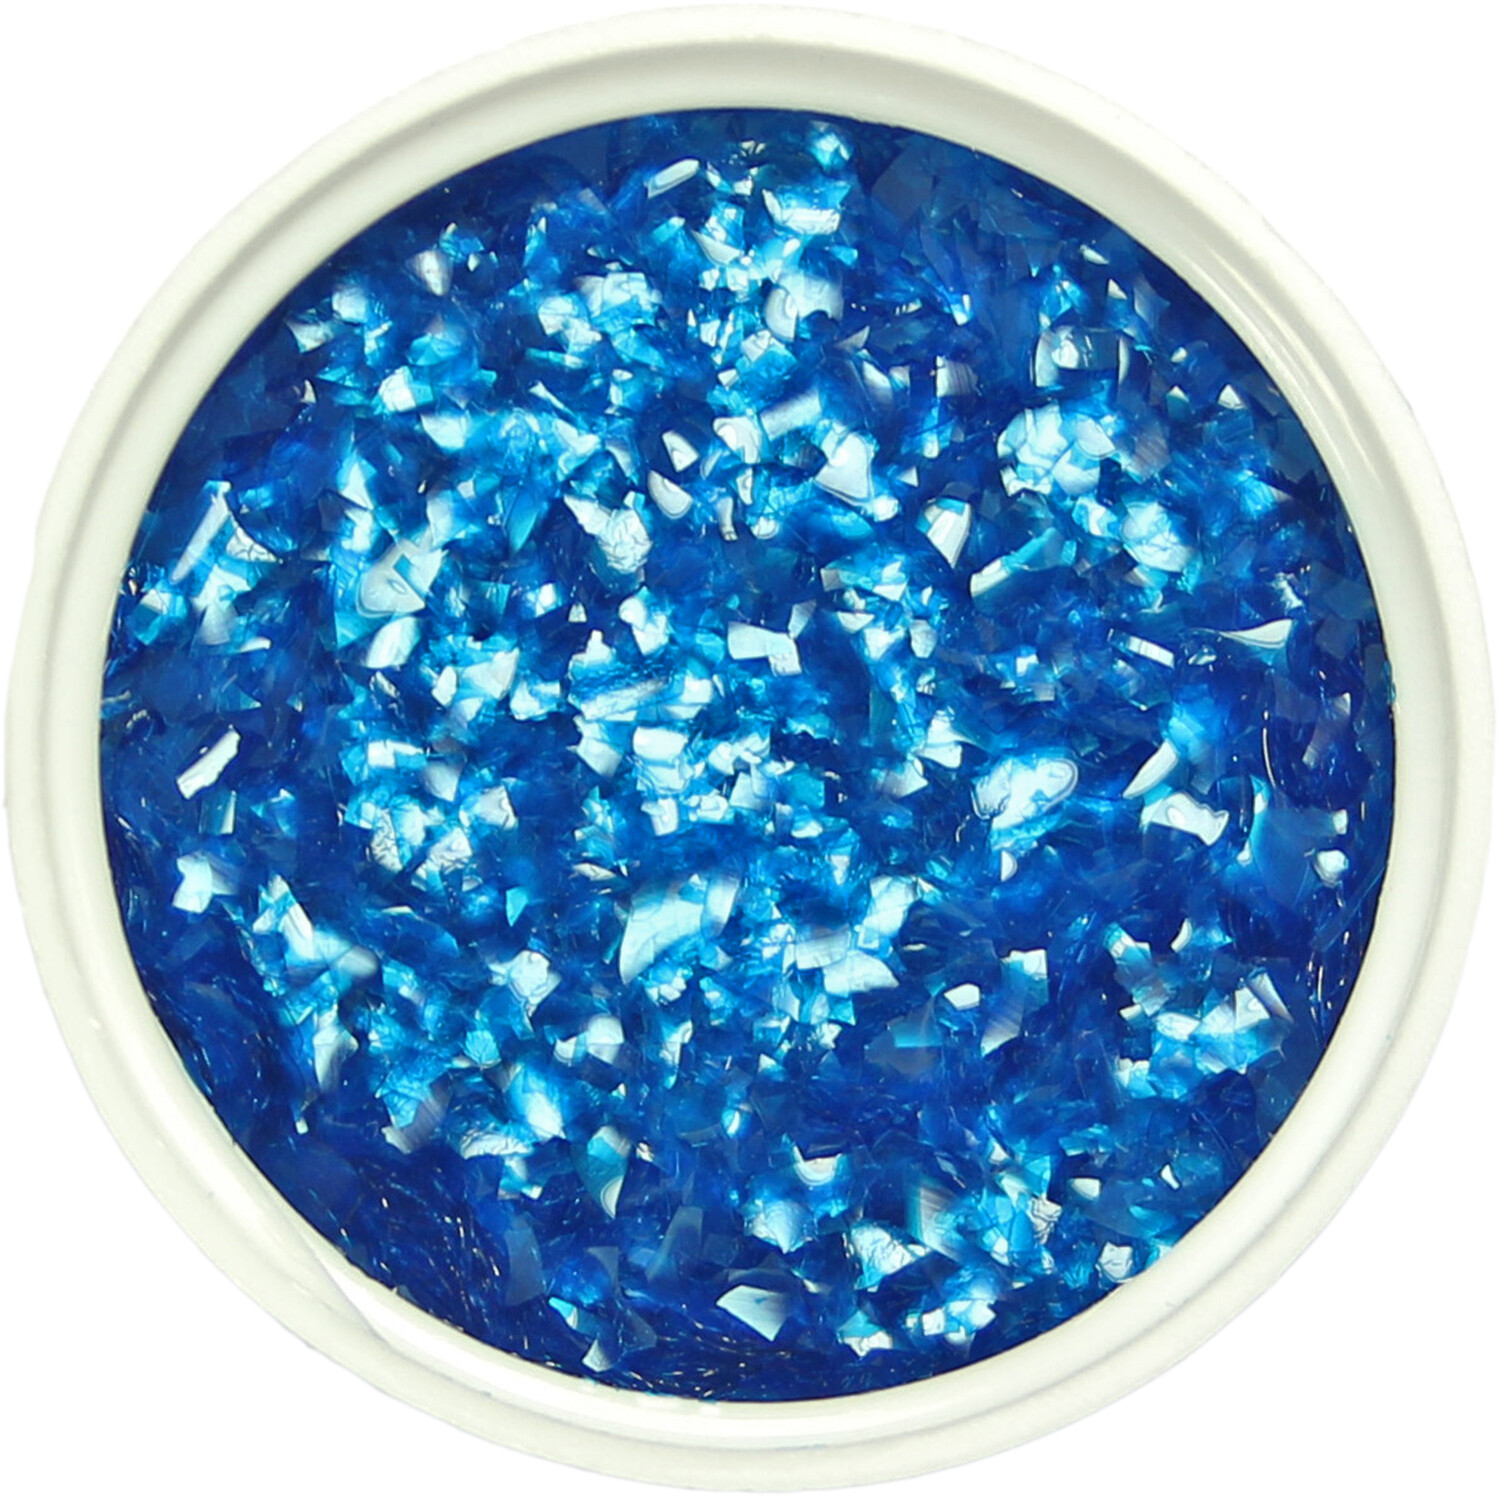 Edible Glitter Flakes - Blue Image 2